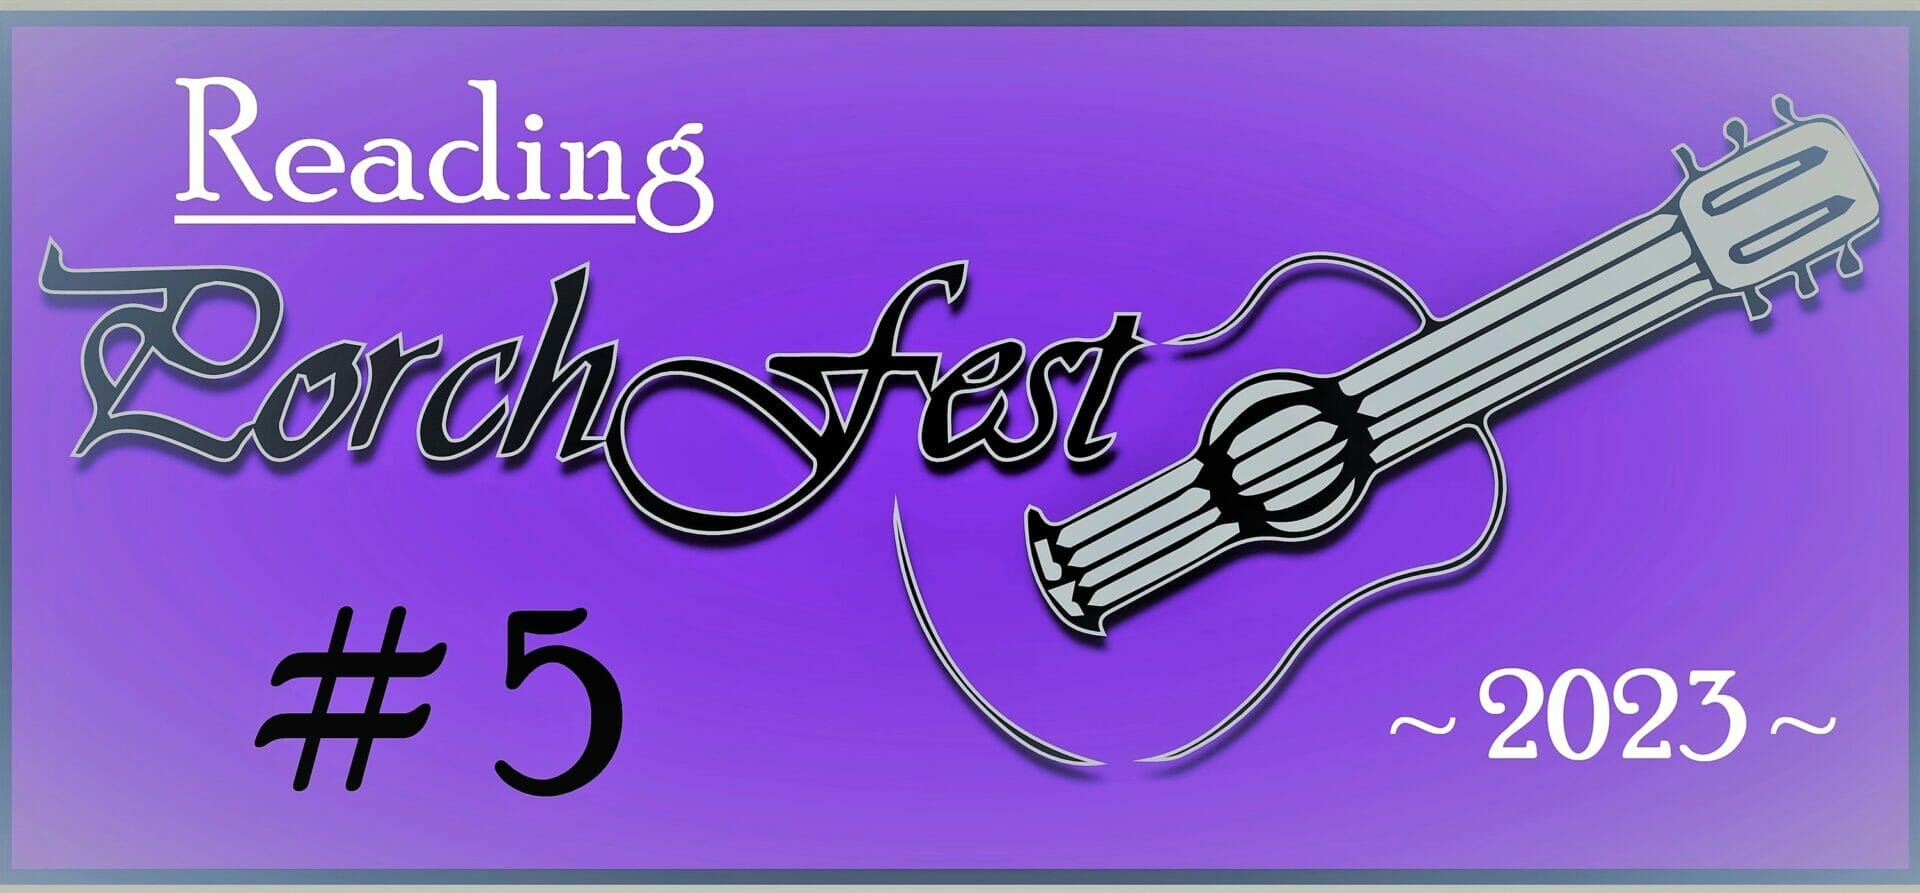 Porchfest Saturday, June 24th, 2023